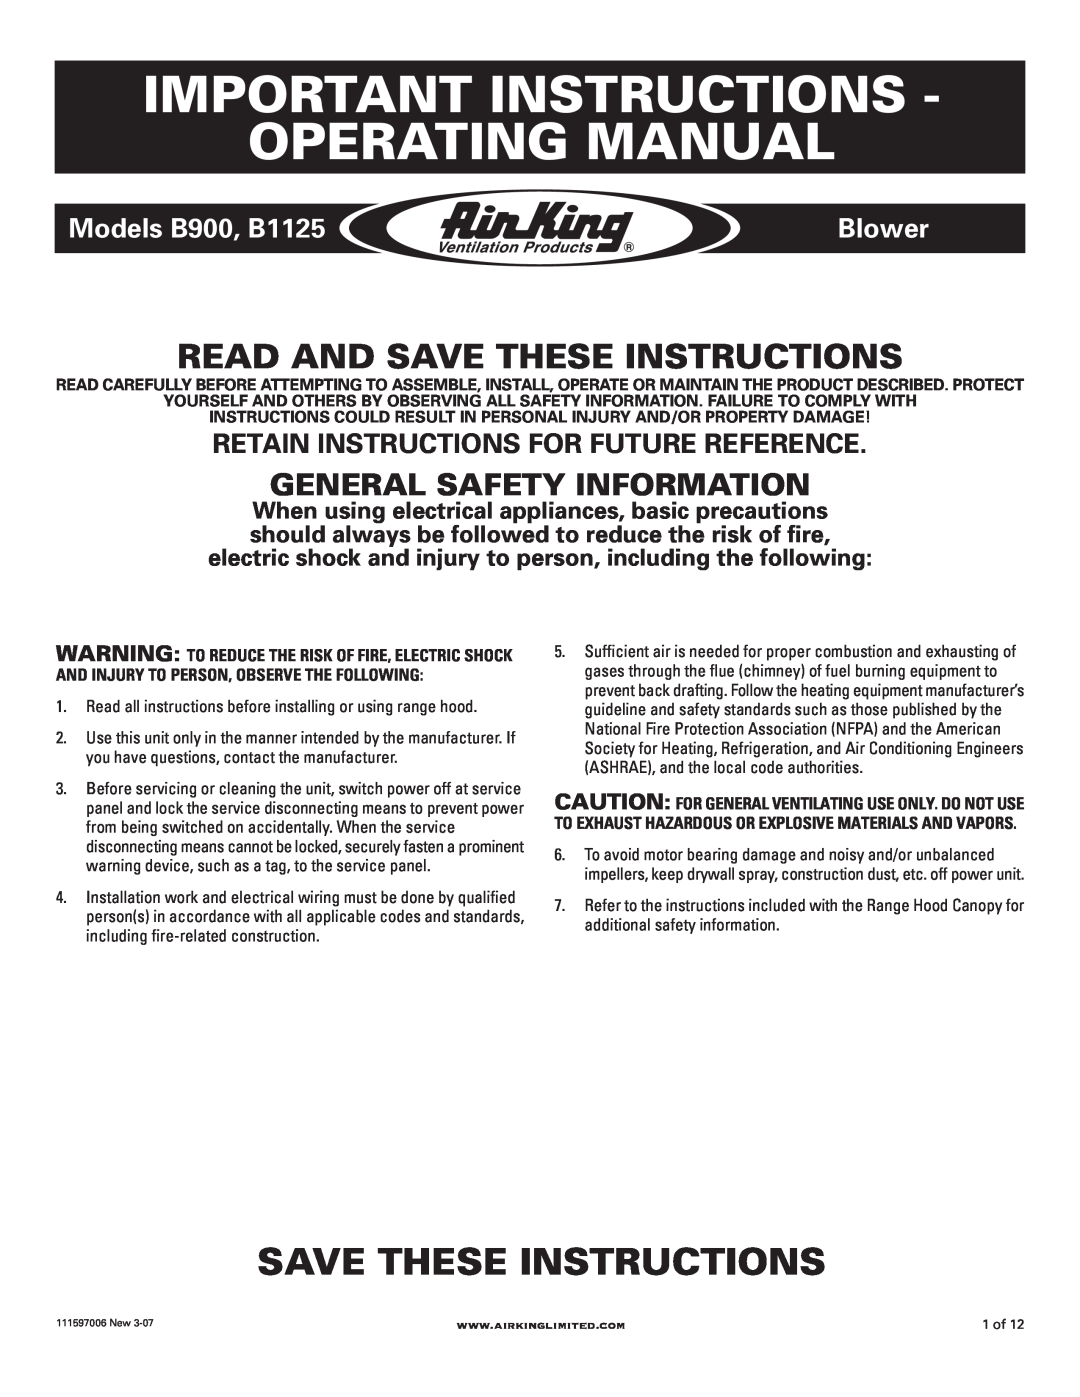 Air King manual Important Instructions Operating Manual, Read And Save These Instructions, Models B900, B1125 